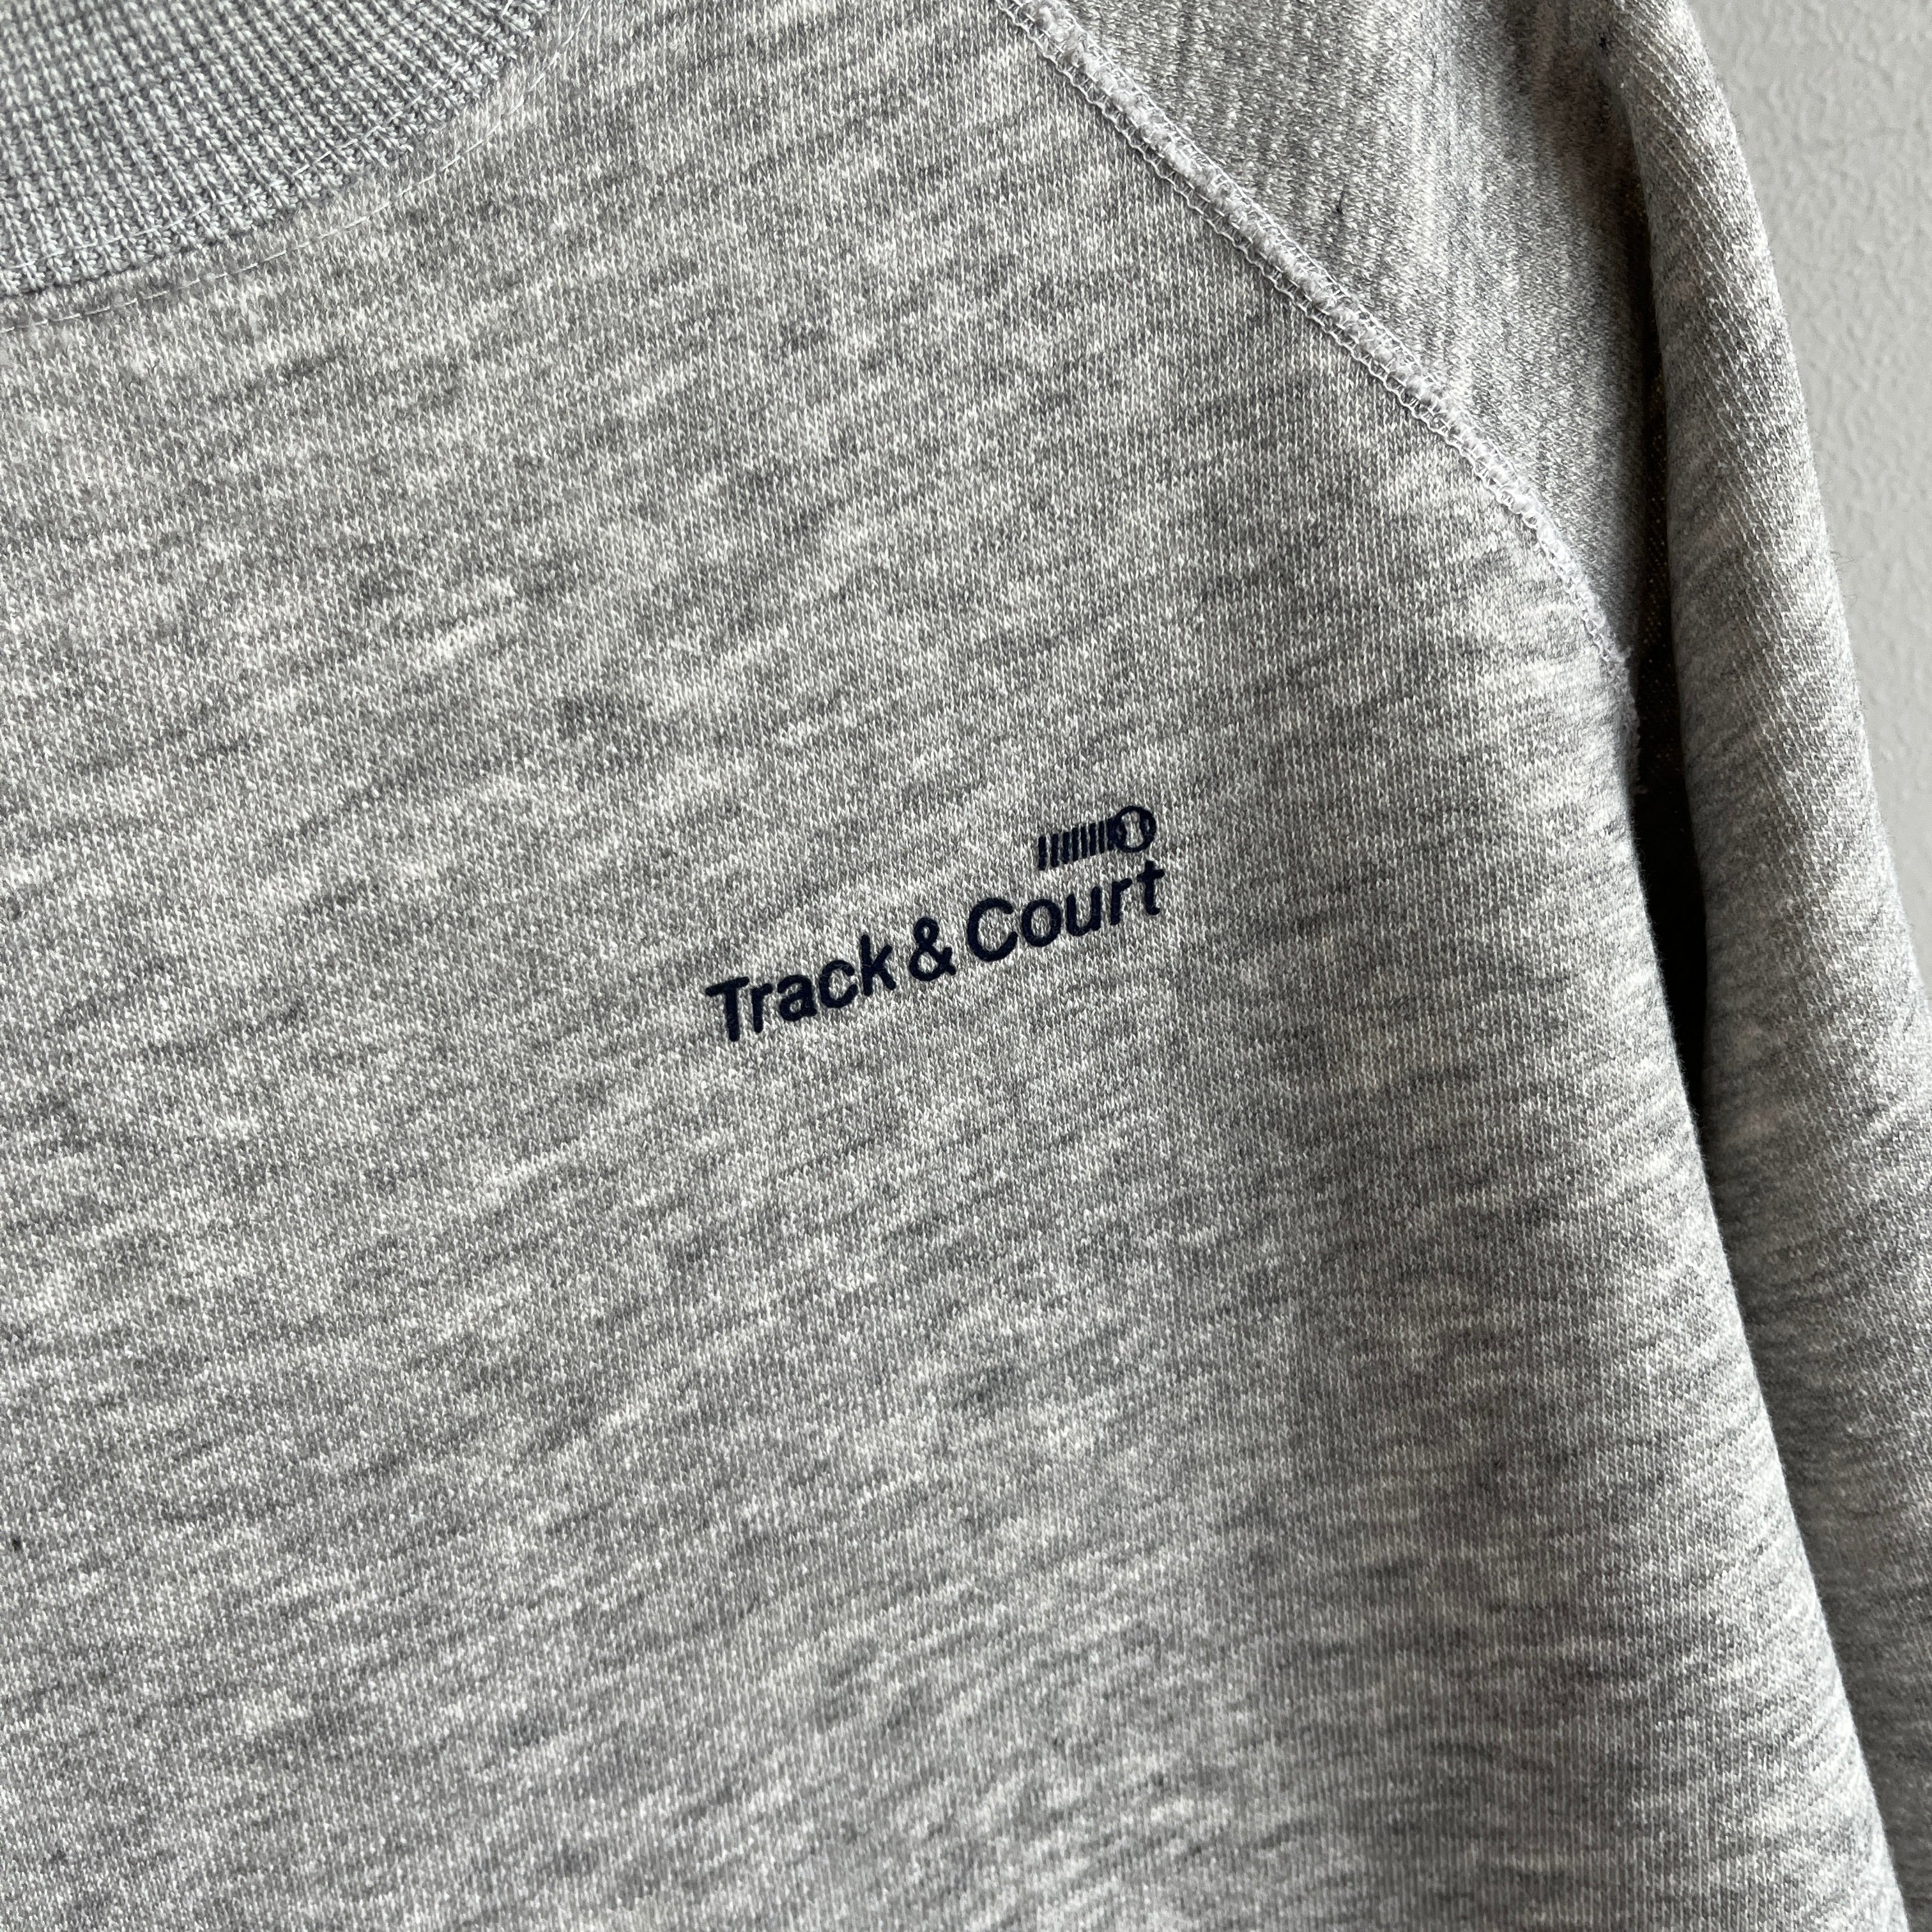 1980s Track And Court Gray Raglan Sweatshirt